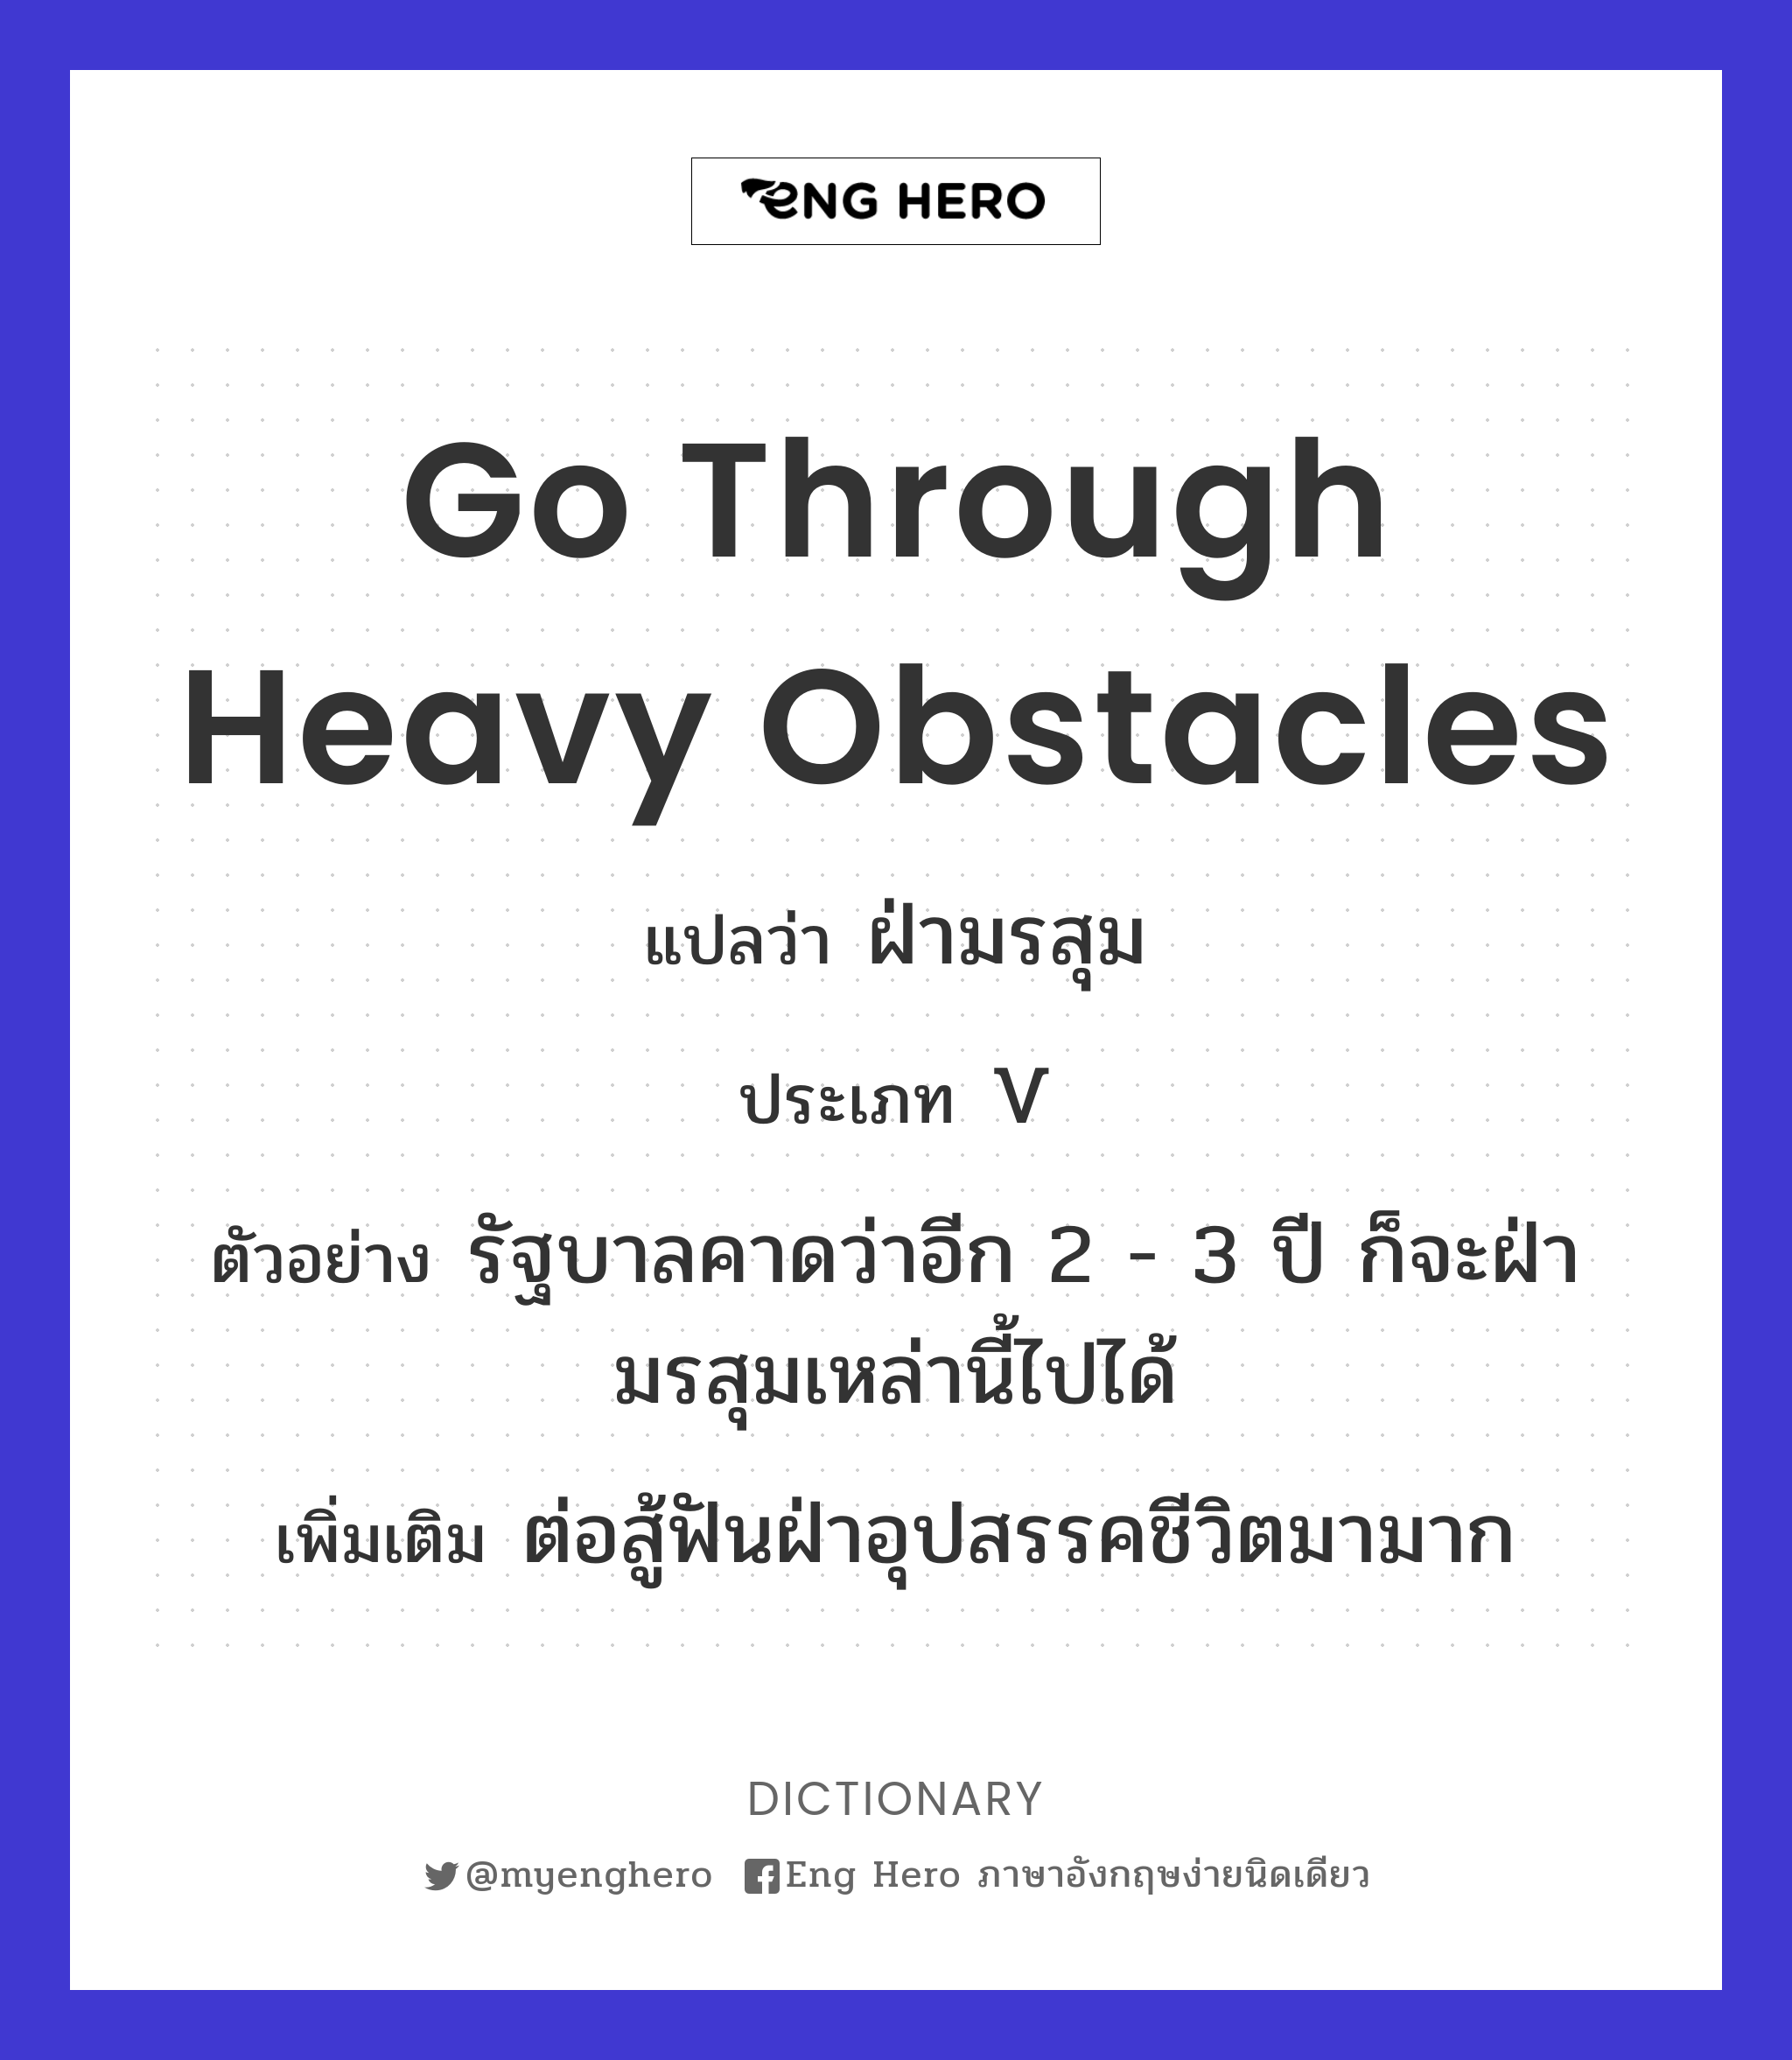 go through heavy obstacles